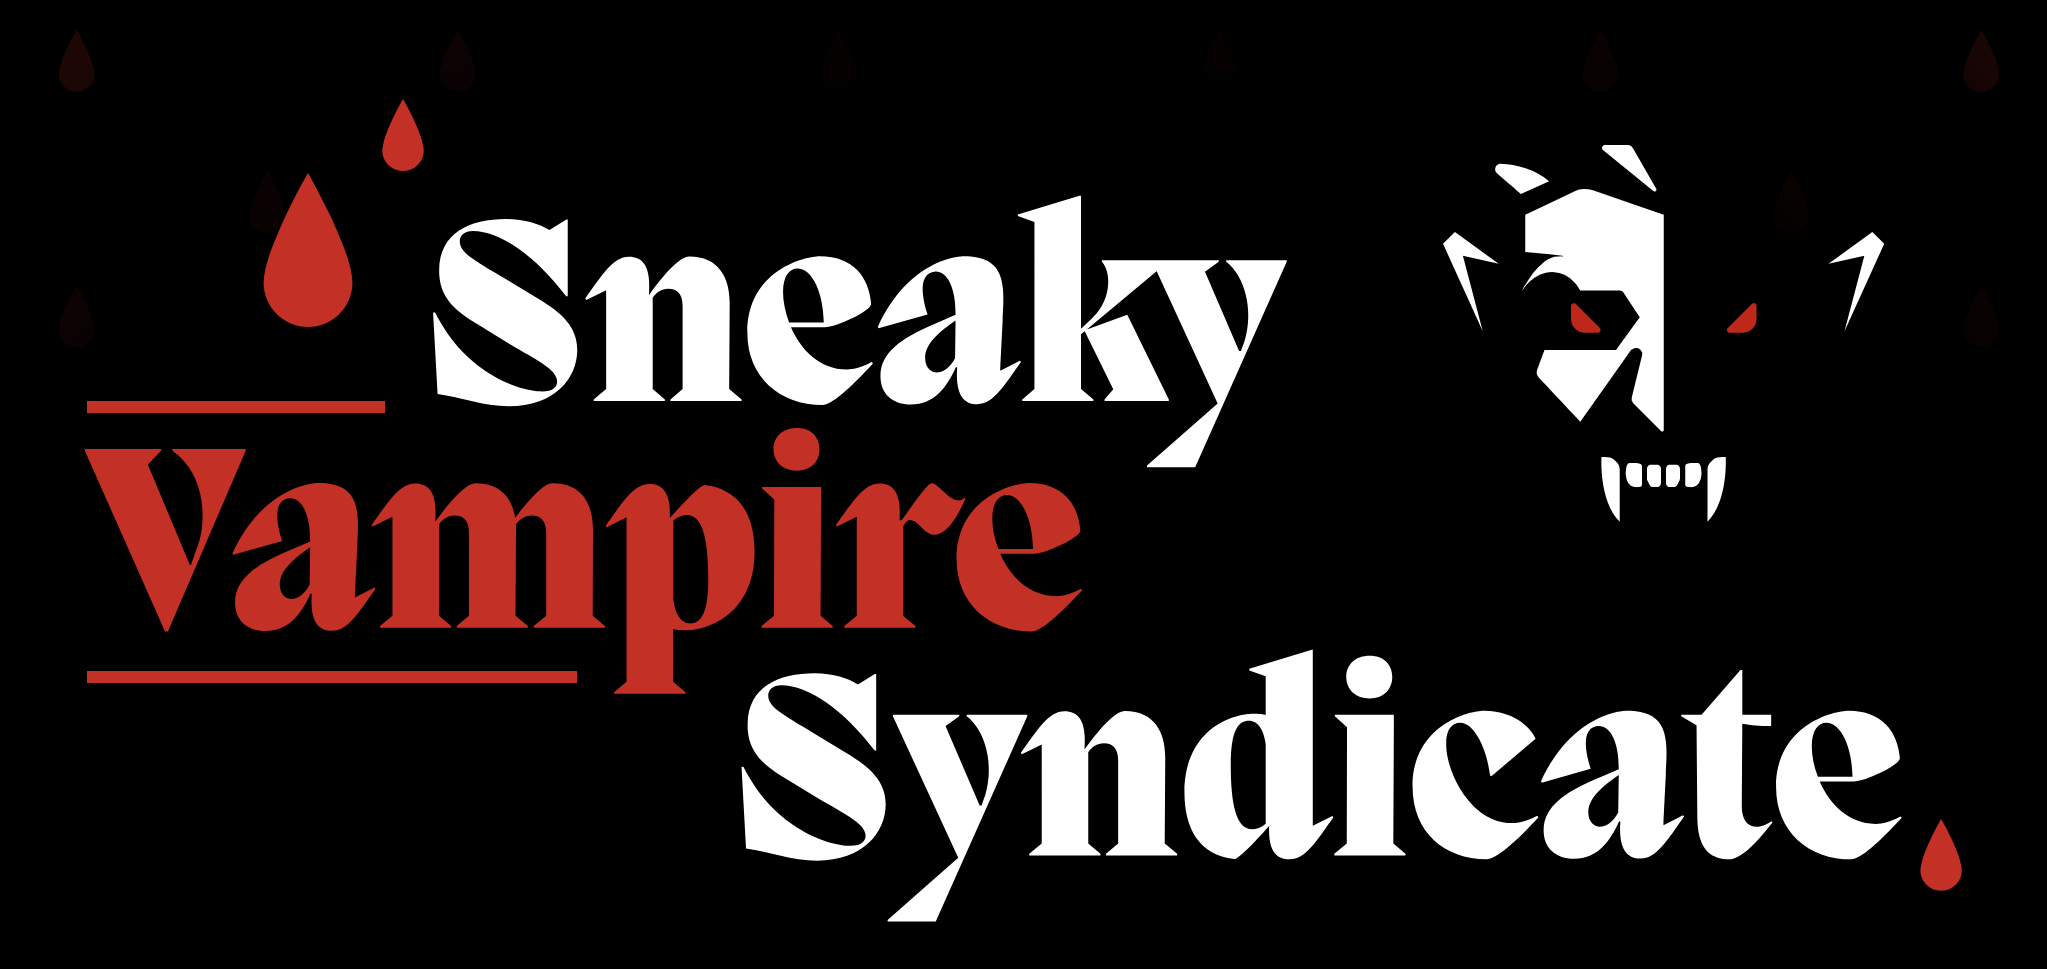 Sneaky Vampire Syndicate